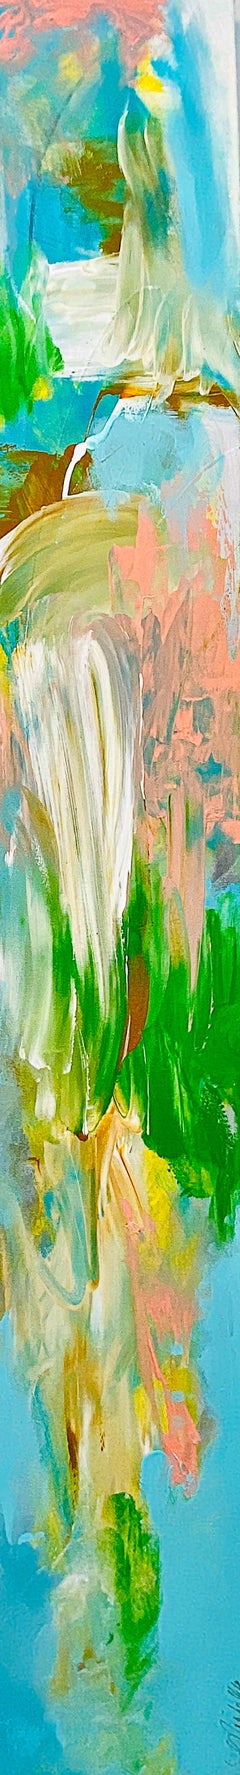 «ong of Spring », paysage abstrait, émotionnel, pastel, bleu, pêche, vert